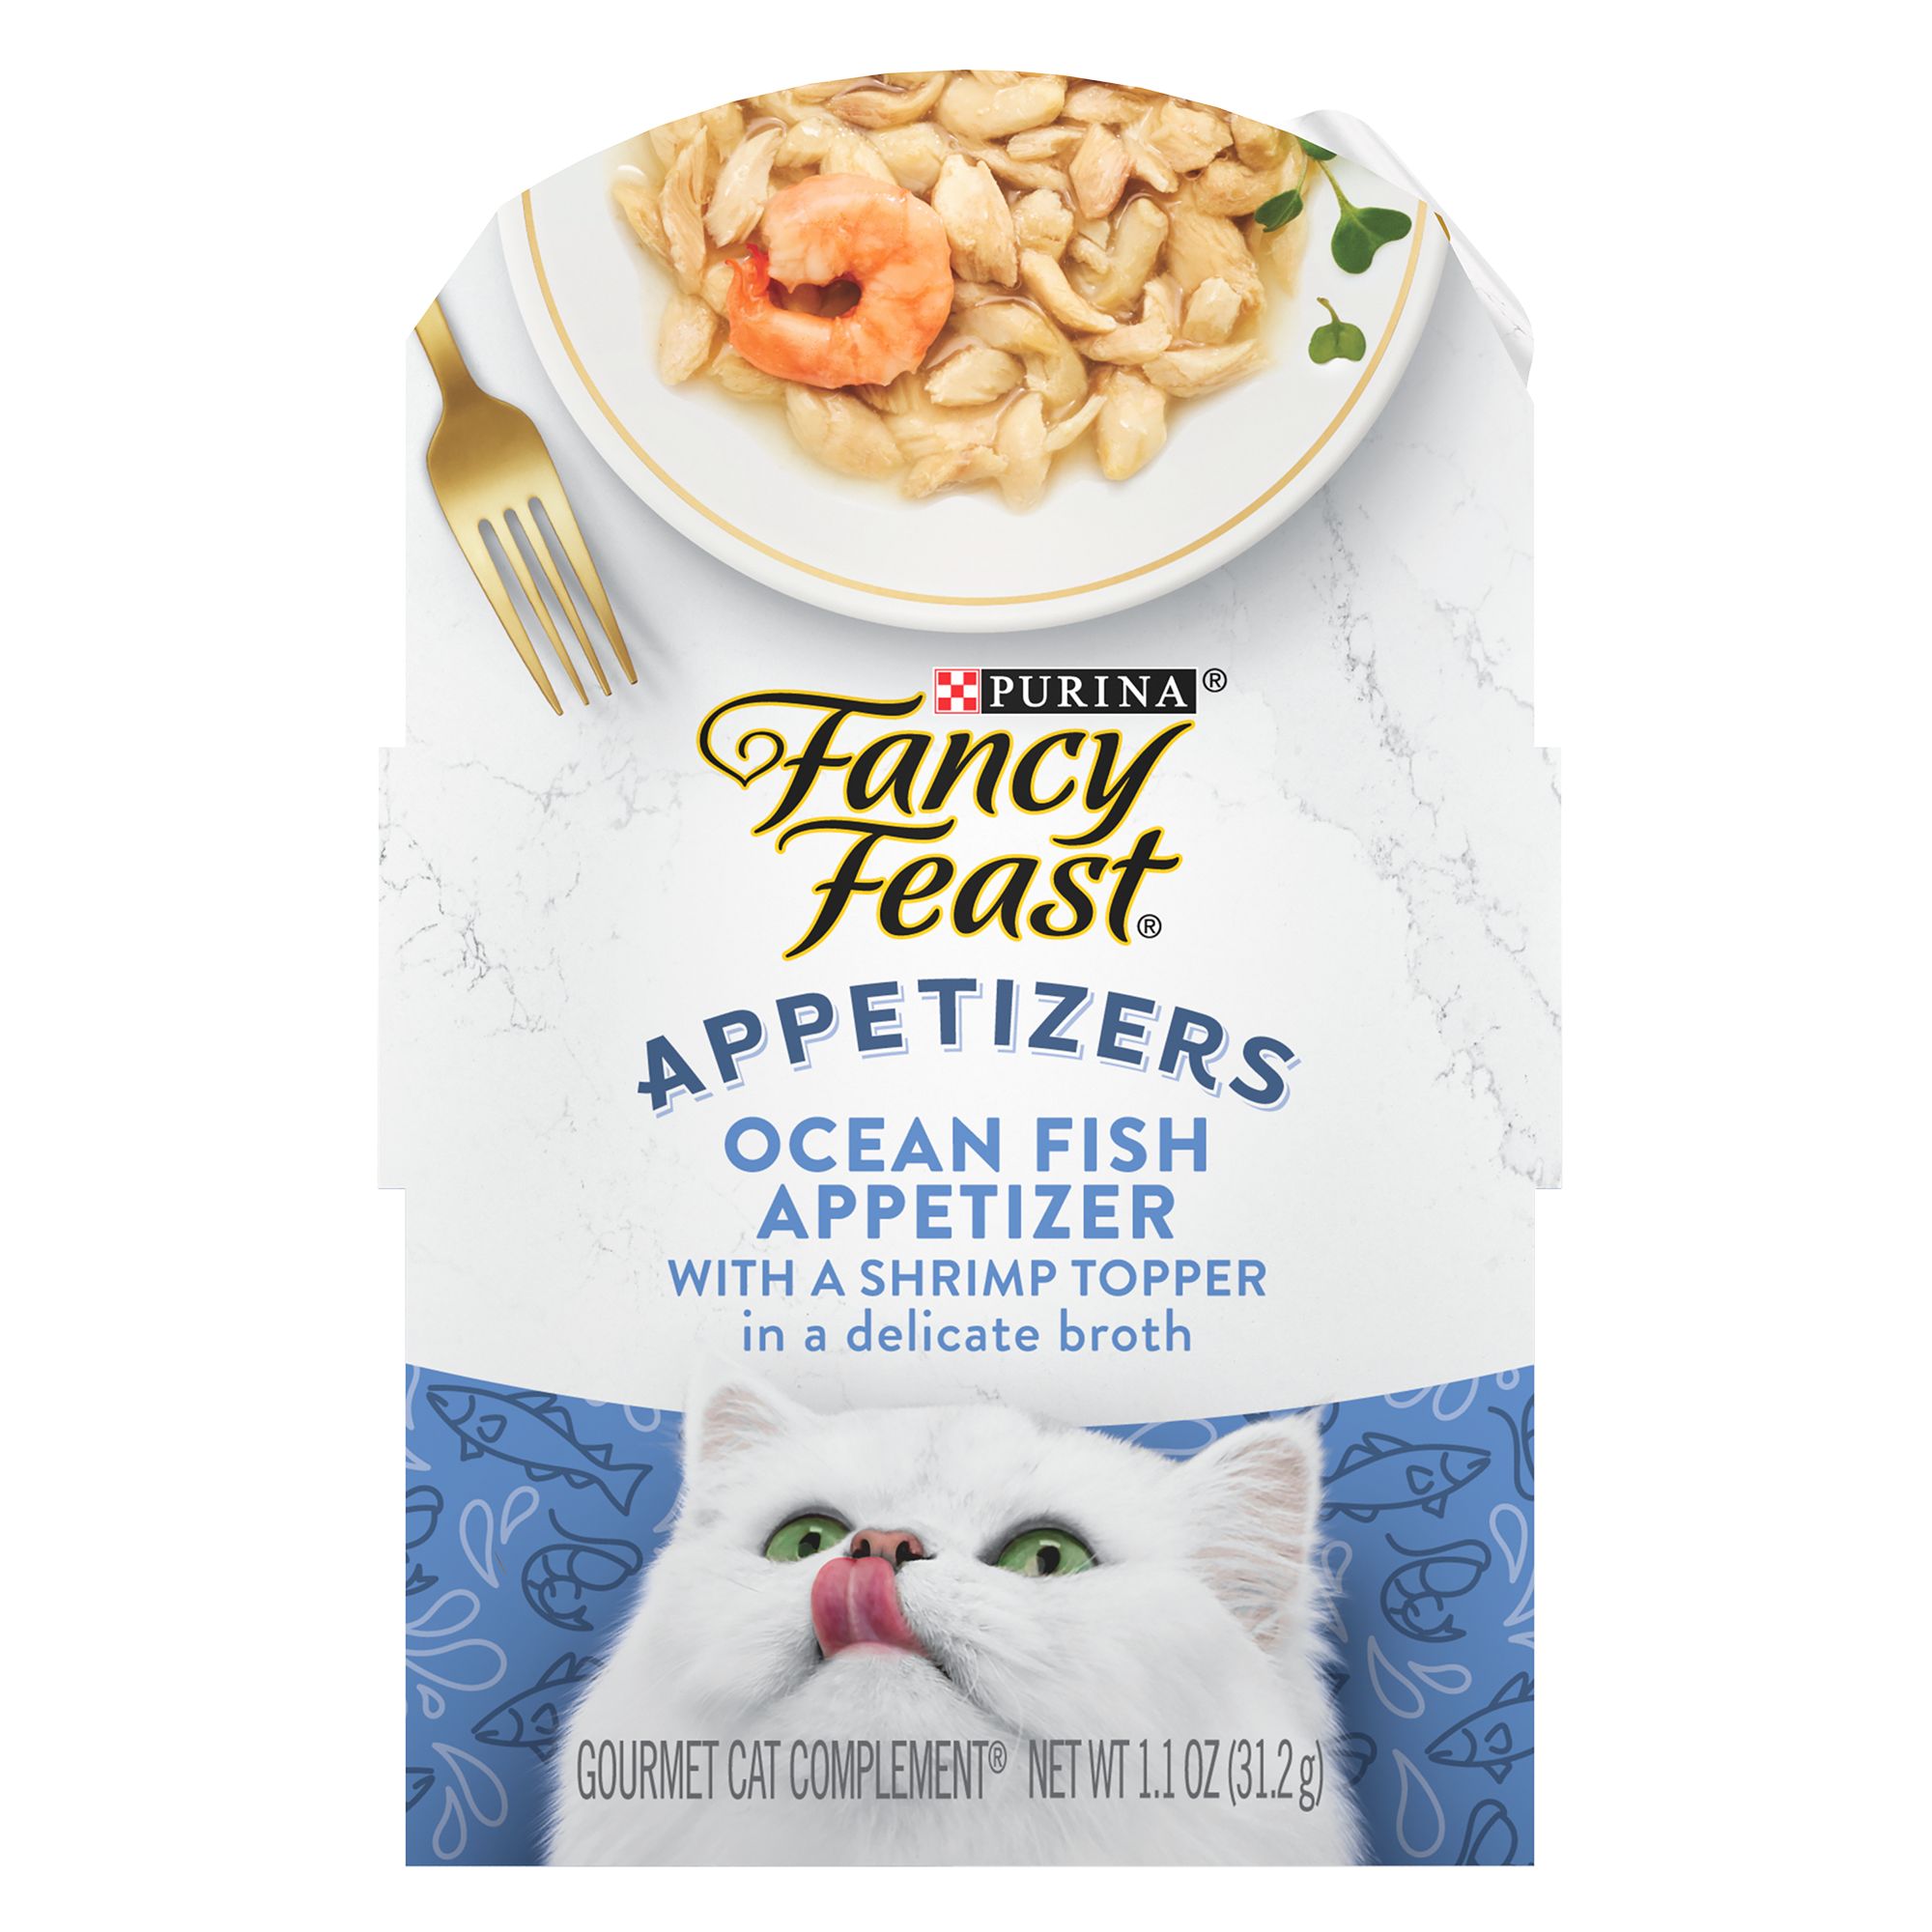 Cat Food: Dry & Wet Kitten Food | PetSmart